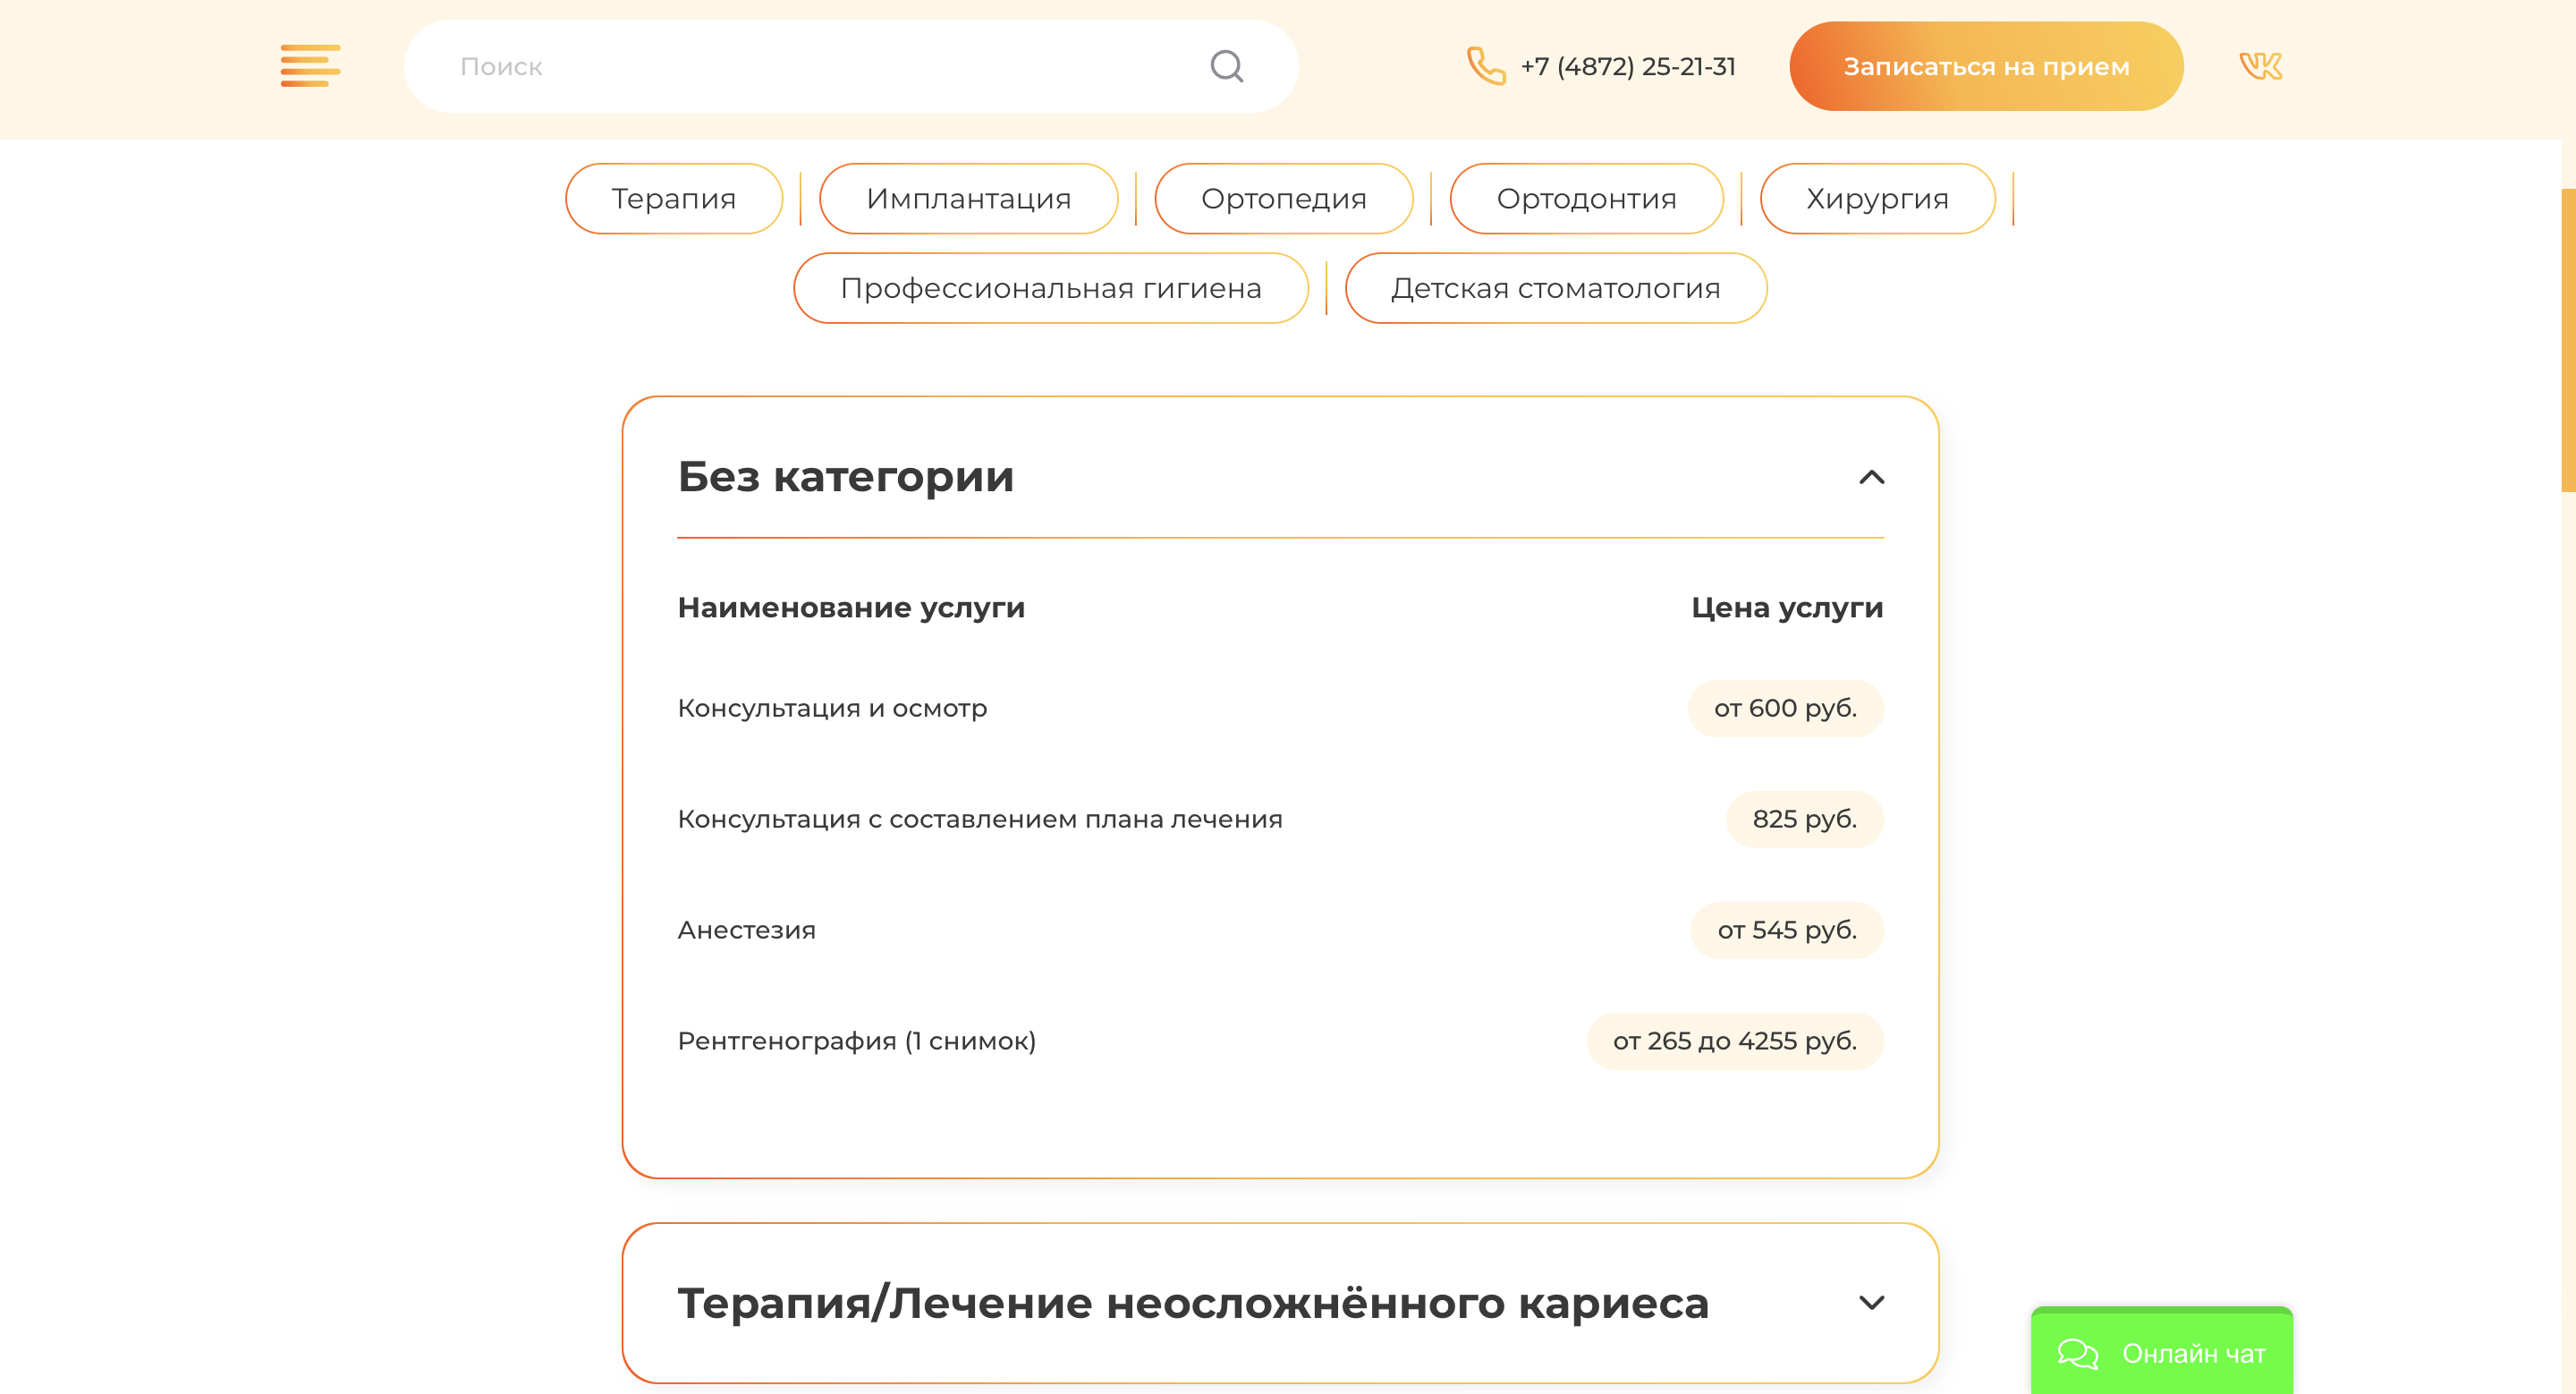 tuladent.ru / Прайс